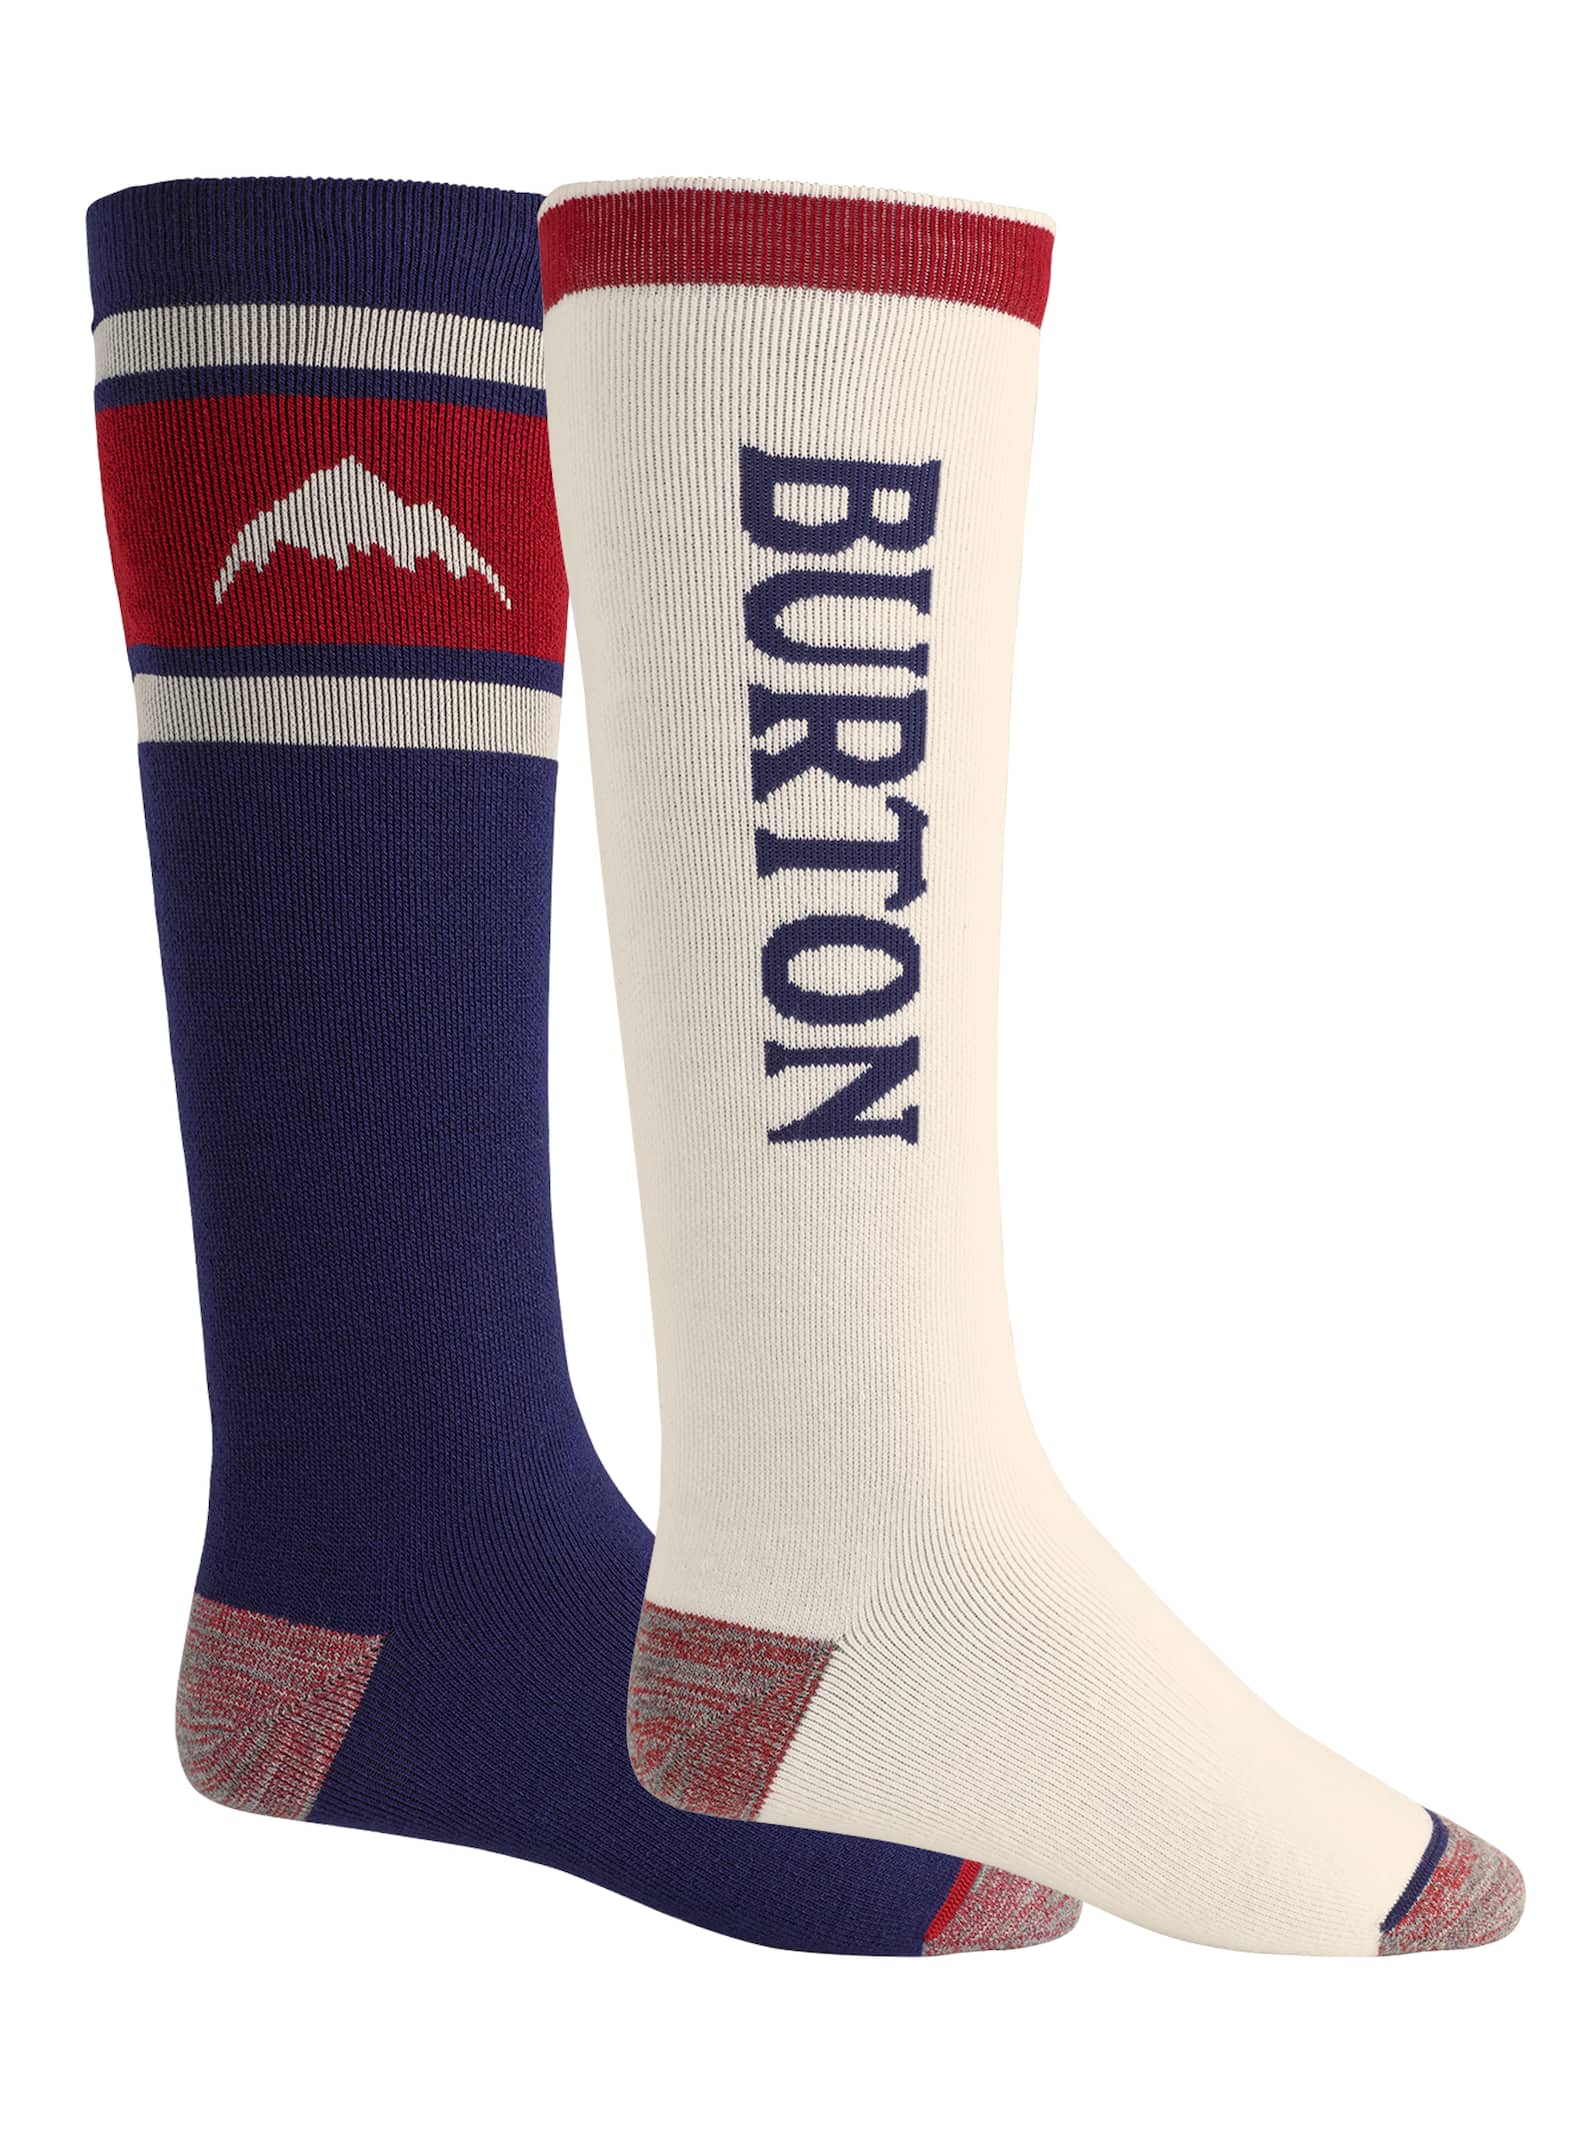 Men's Socks | Burton Snowboards AU